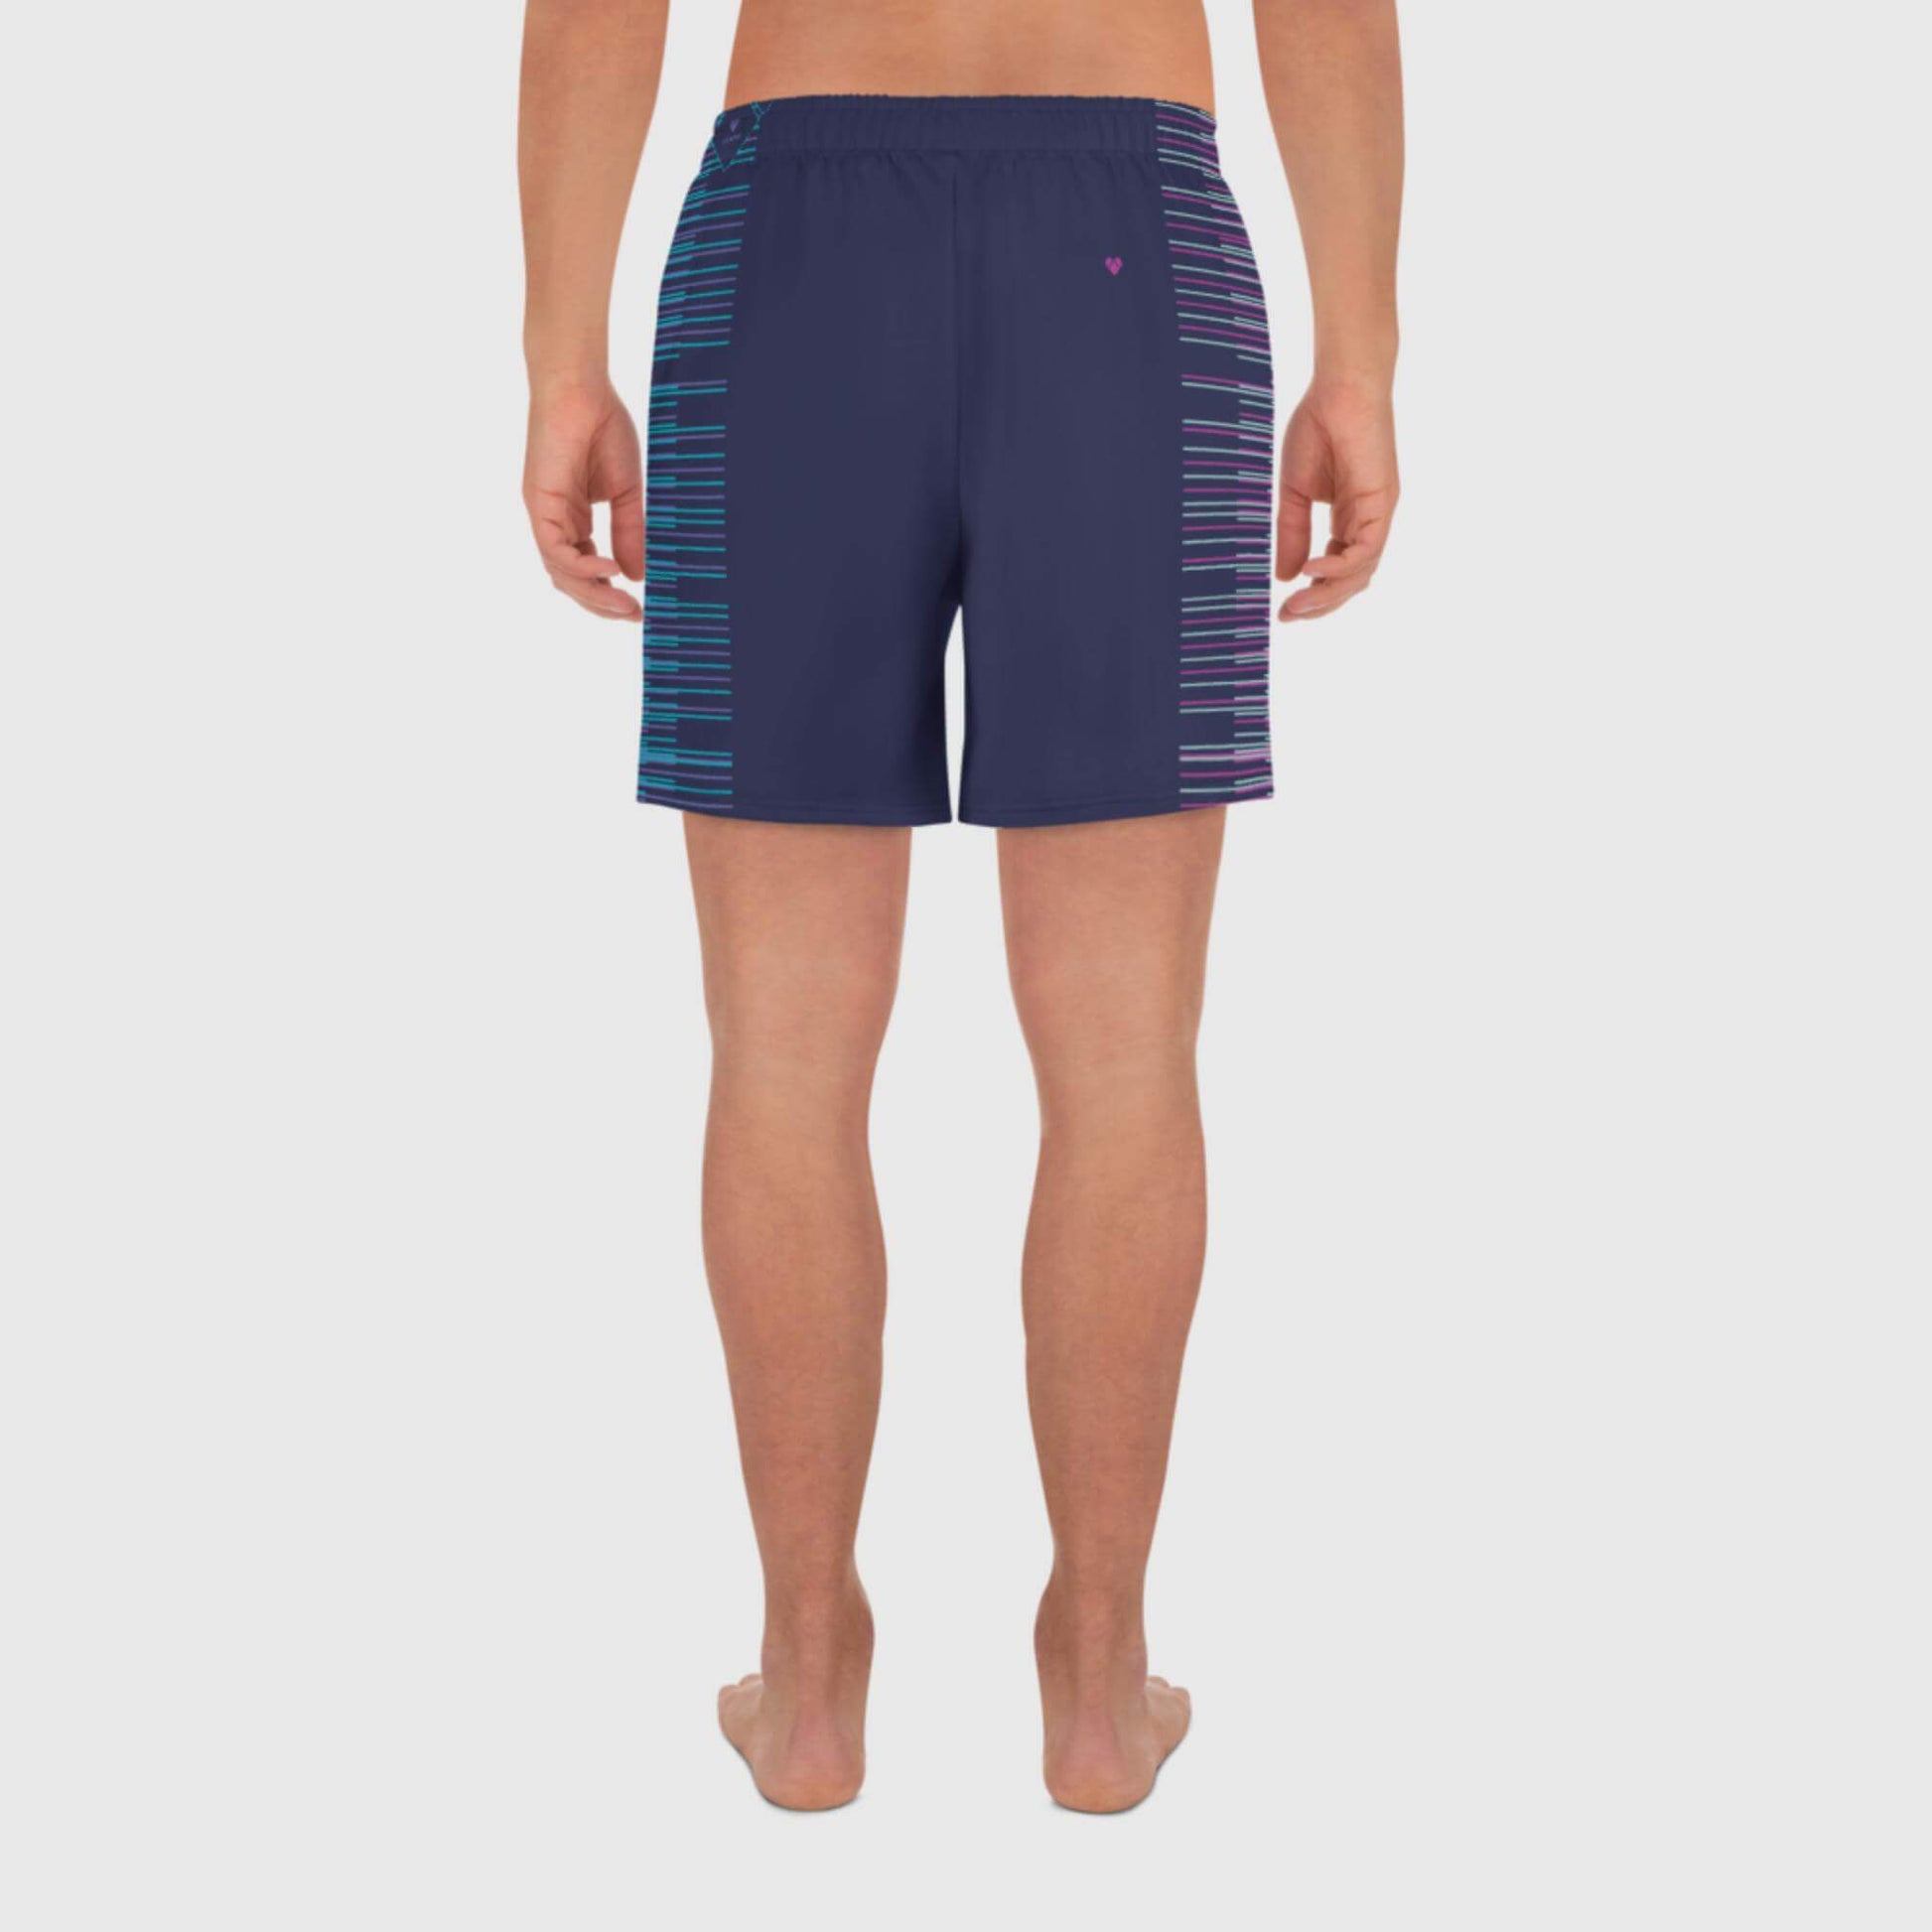 Bold and vibrant stripes on Slate Blue Dual Sport Shorts - CRiZ AMOR's gym revolution